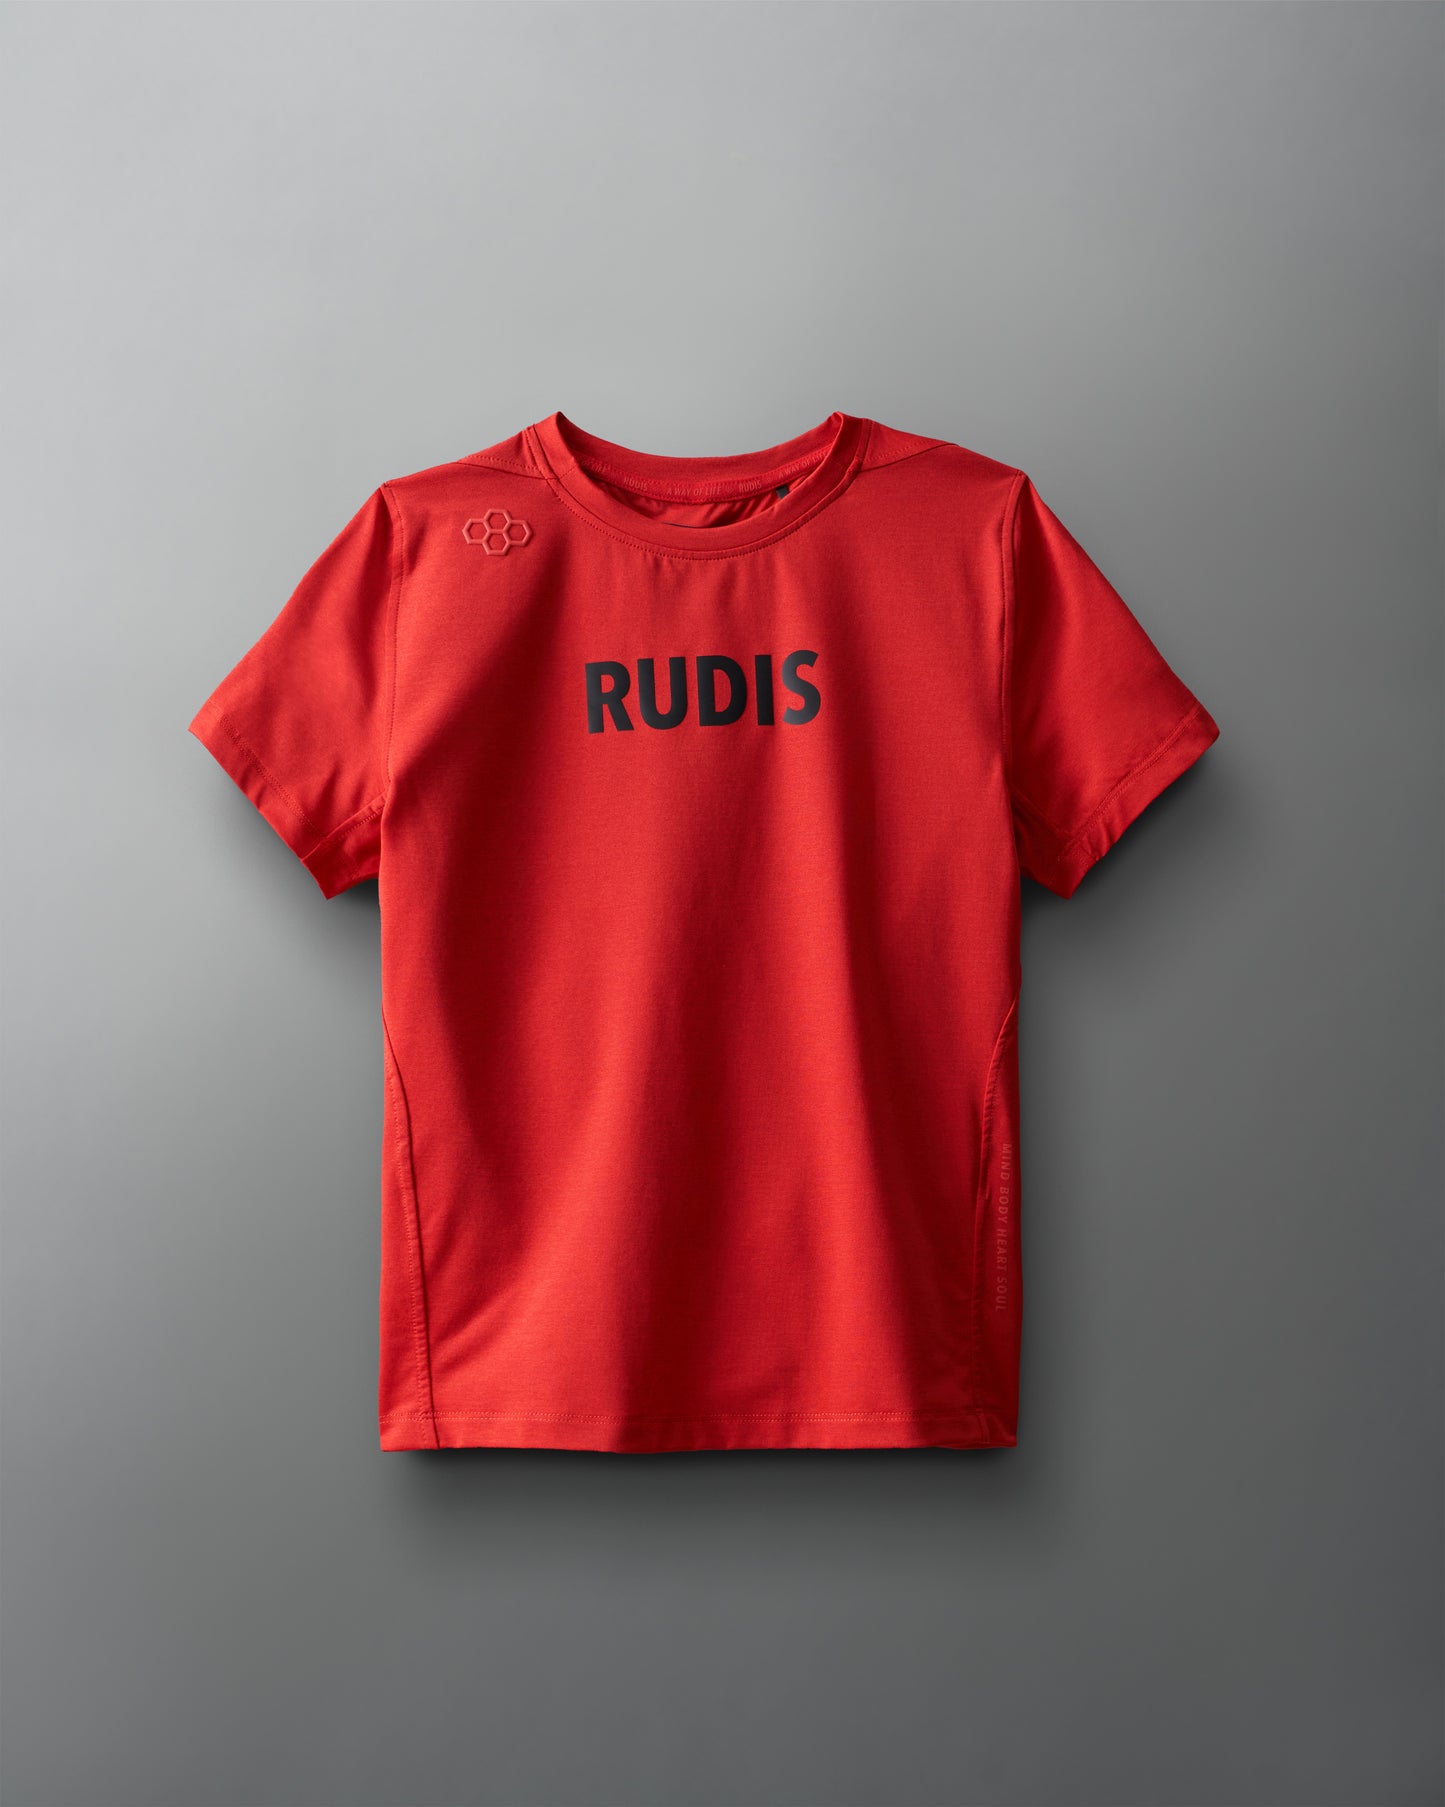 RUDIS Wordmark Performance Heather Youth T-Shirt